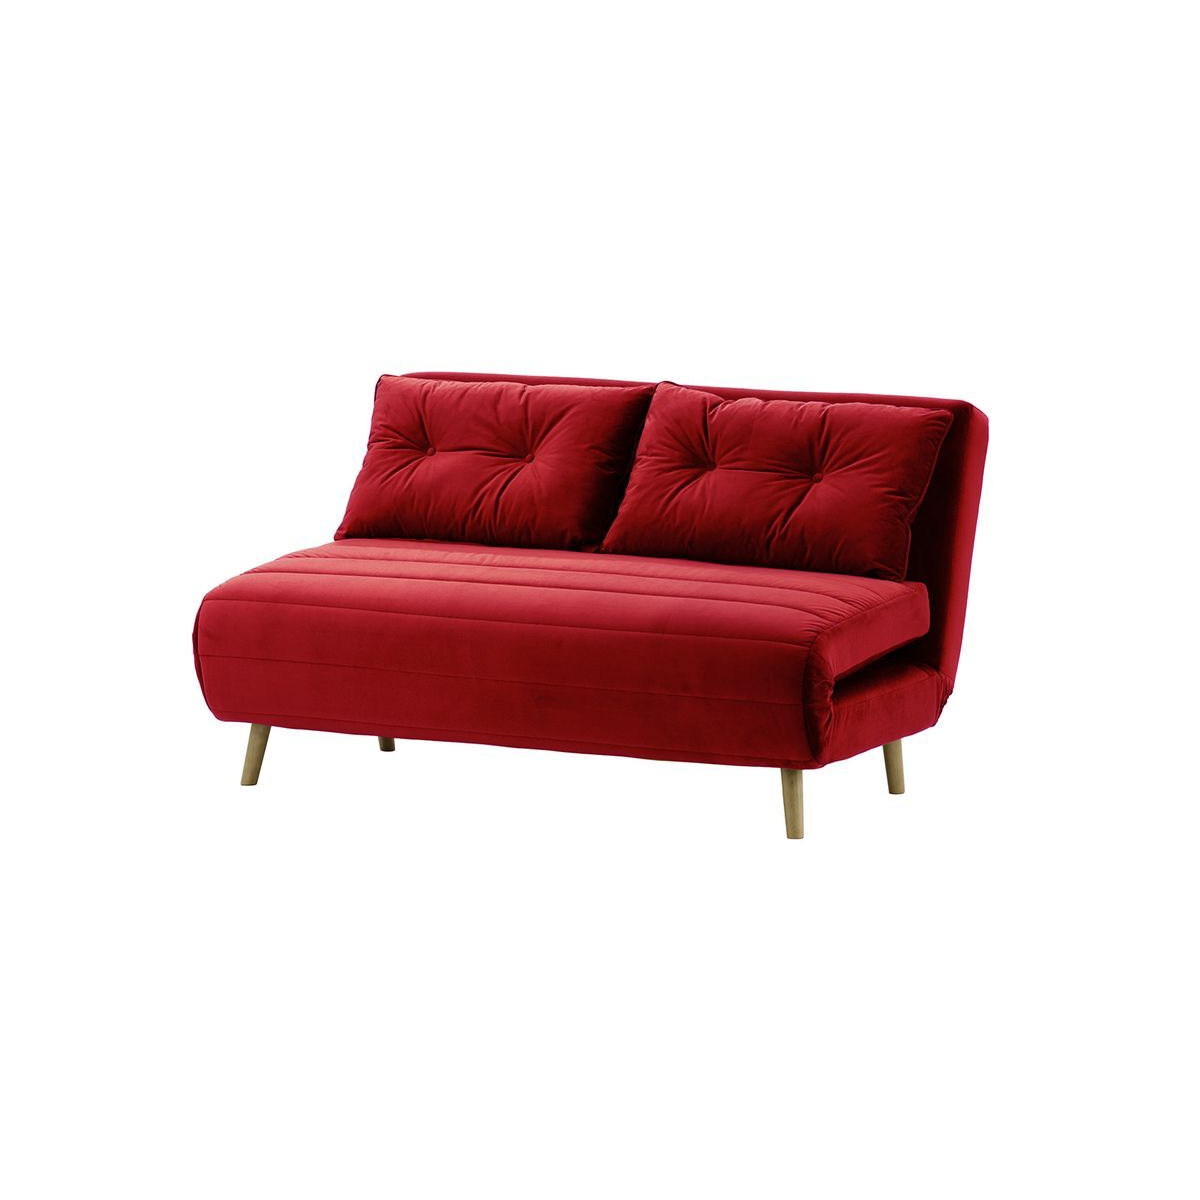 Flic Large Double Sofa Bed - width 142 cm, pink, Leg colour: white - image 1